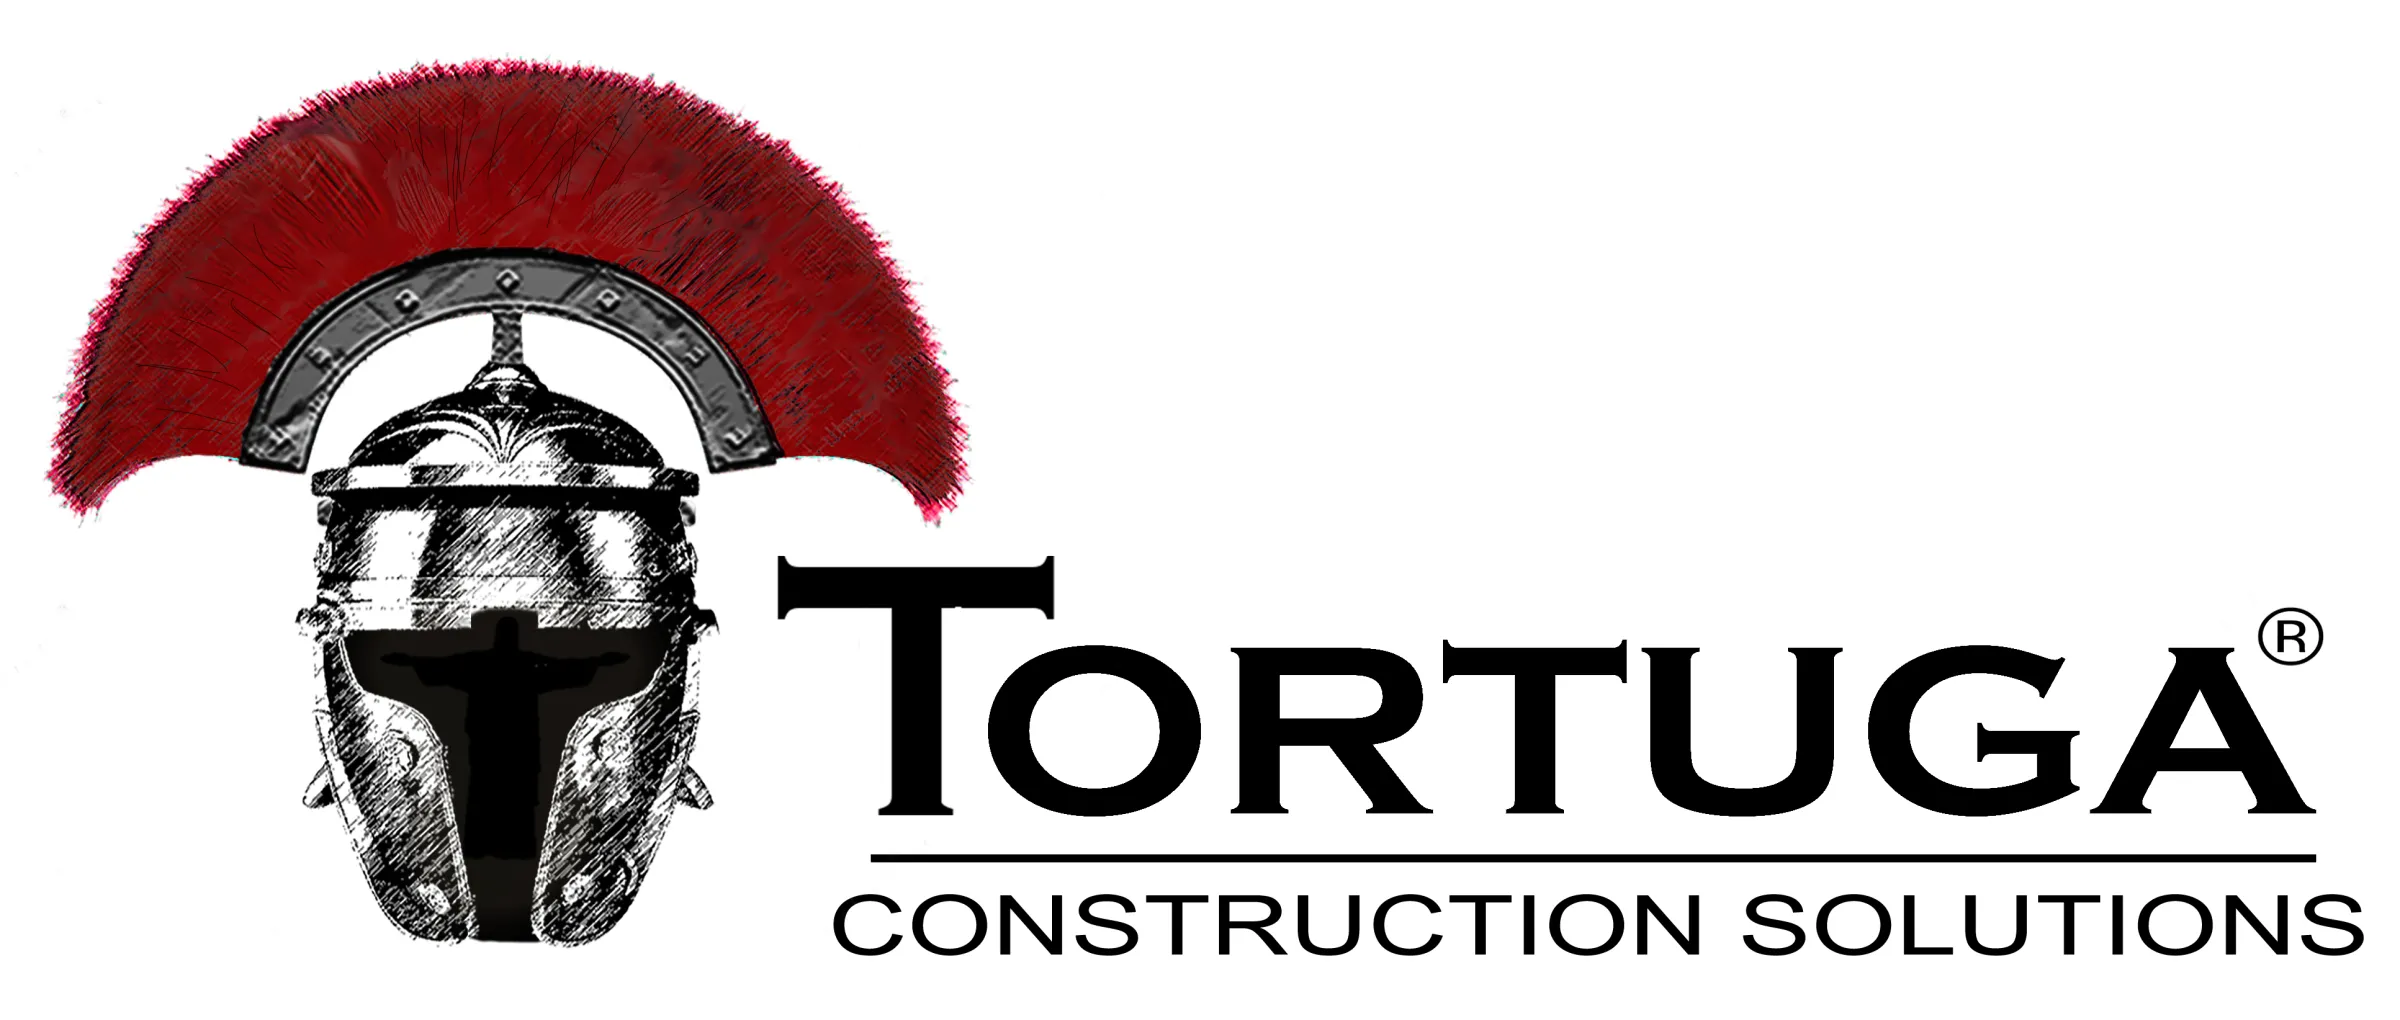 Tortuga Construction Solutions